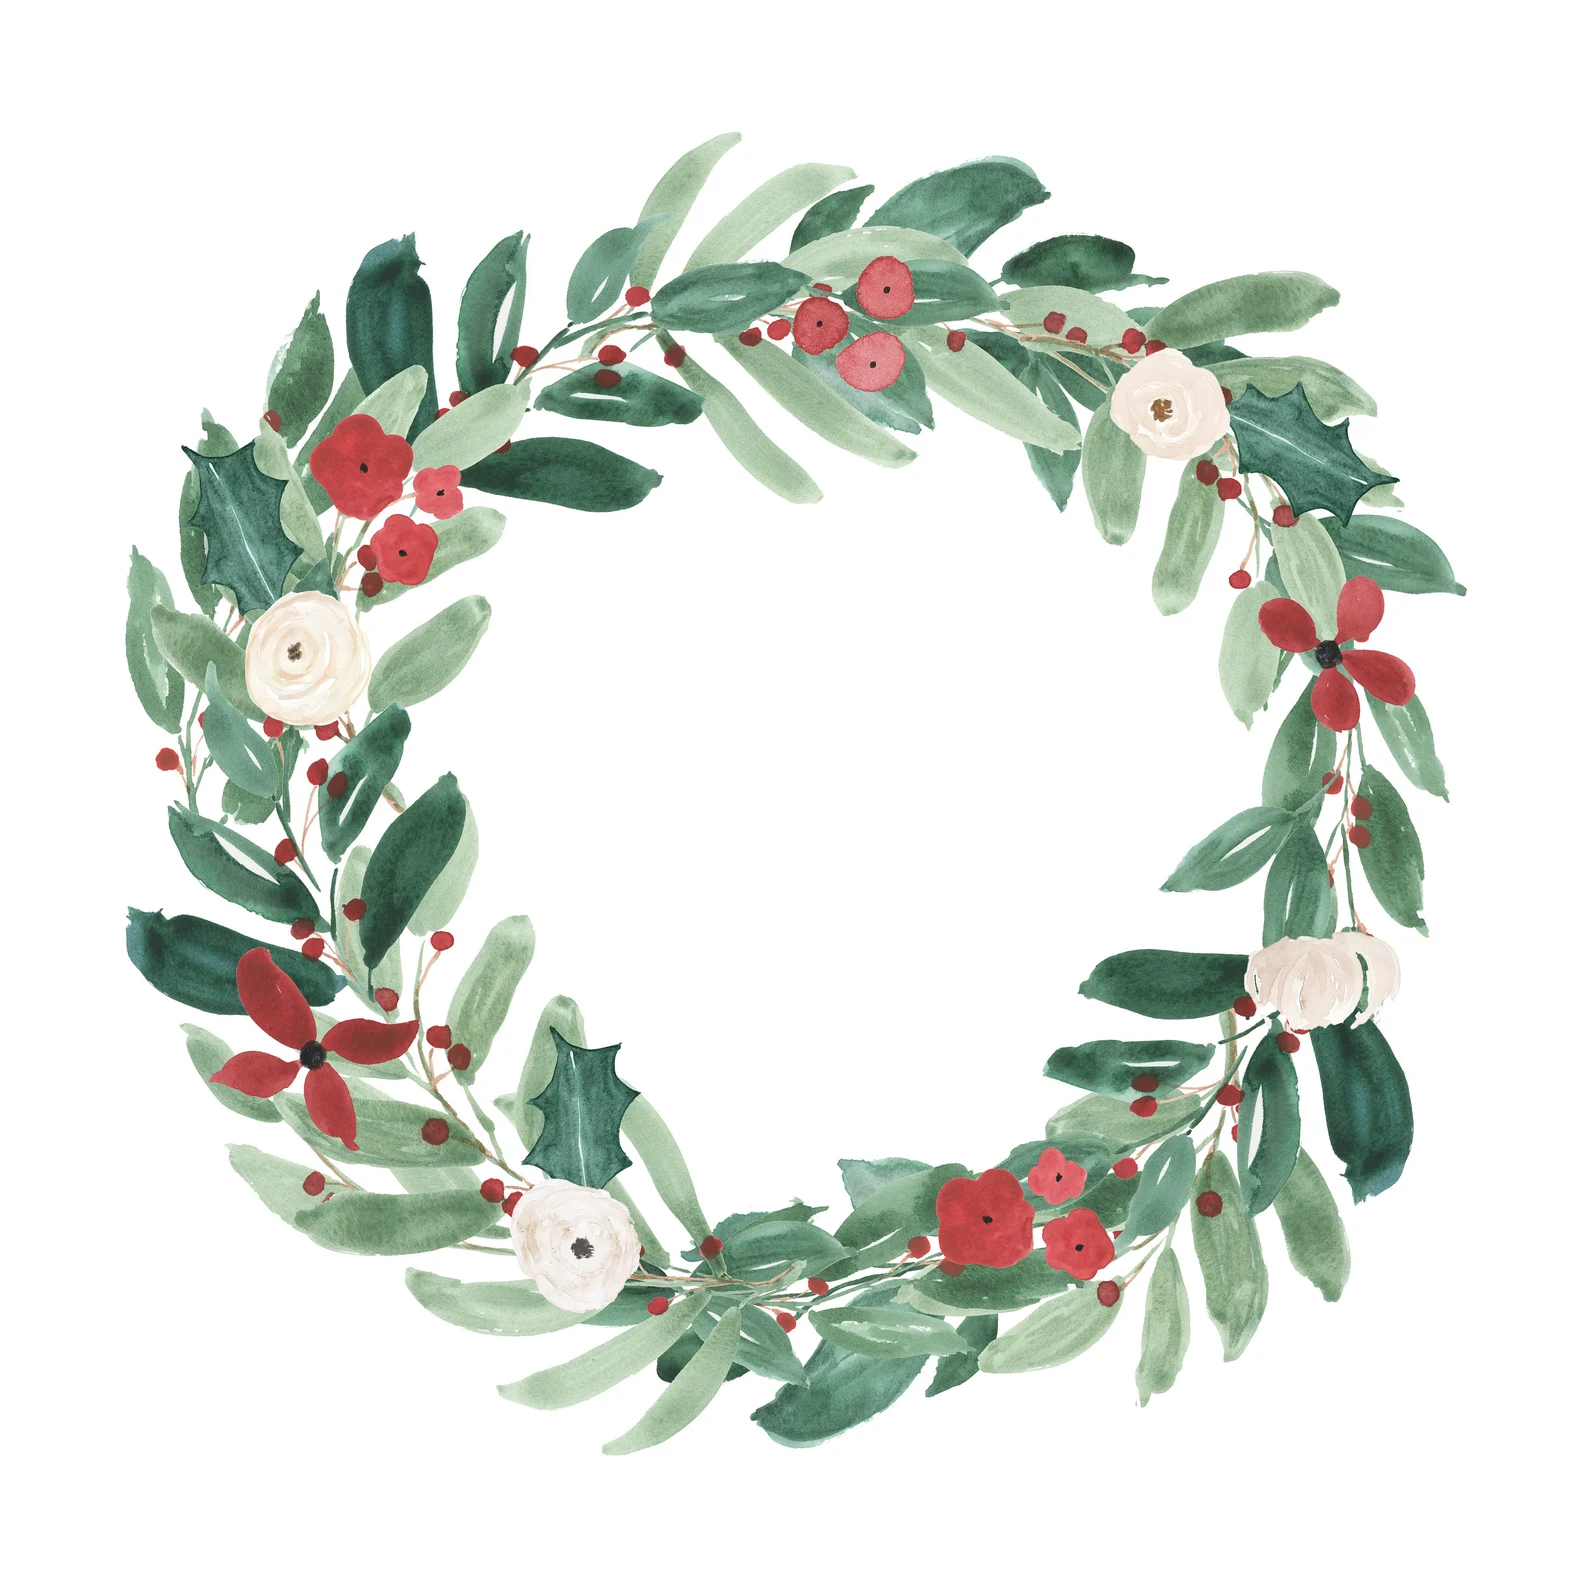 Make a Christmas wreath 9 - 12 a.m.